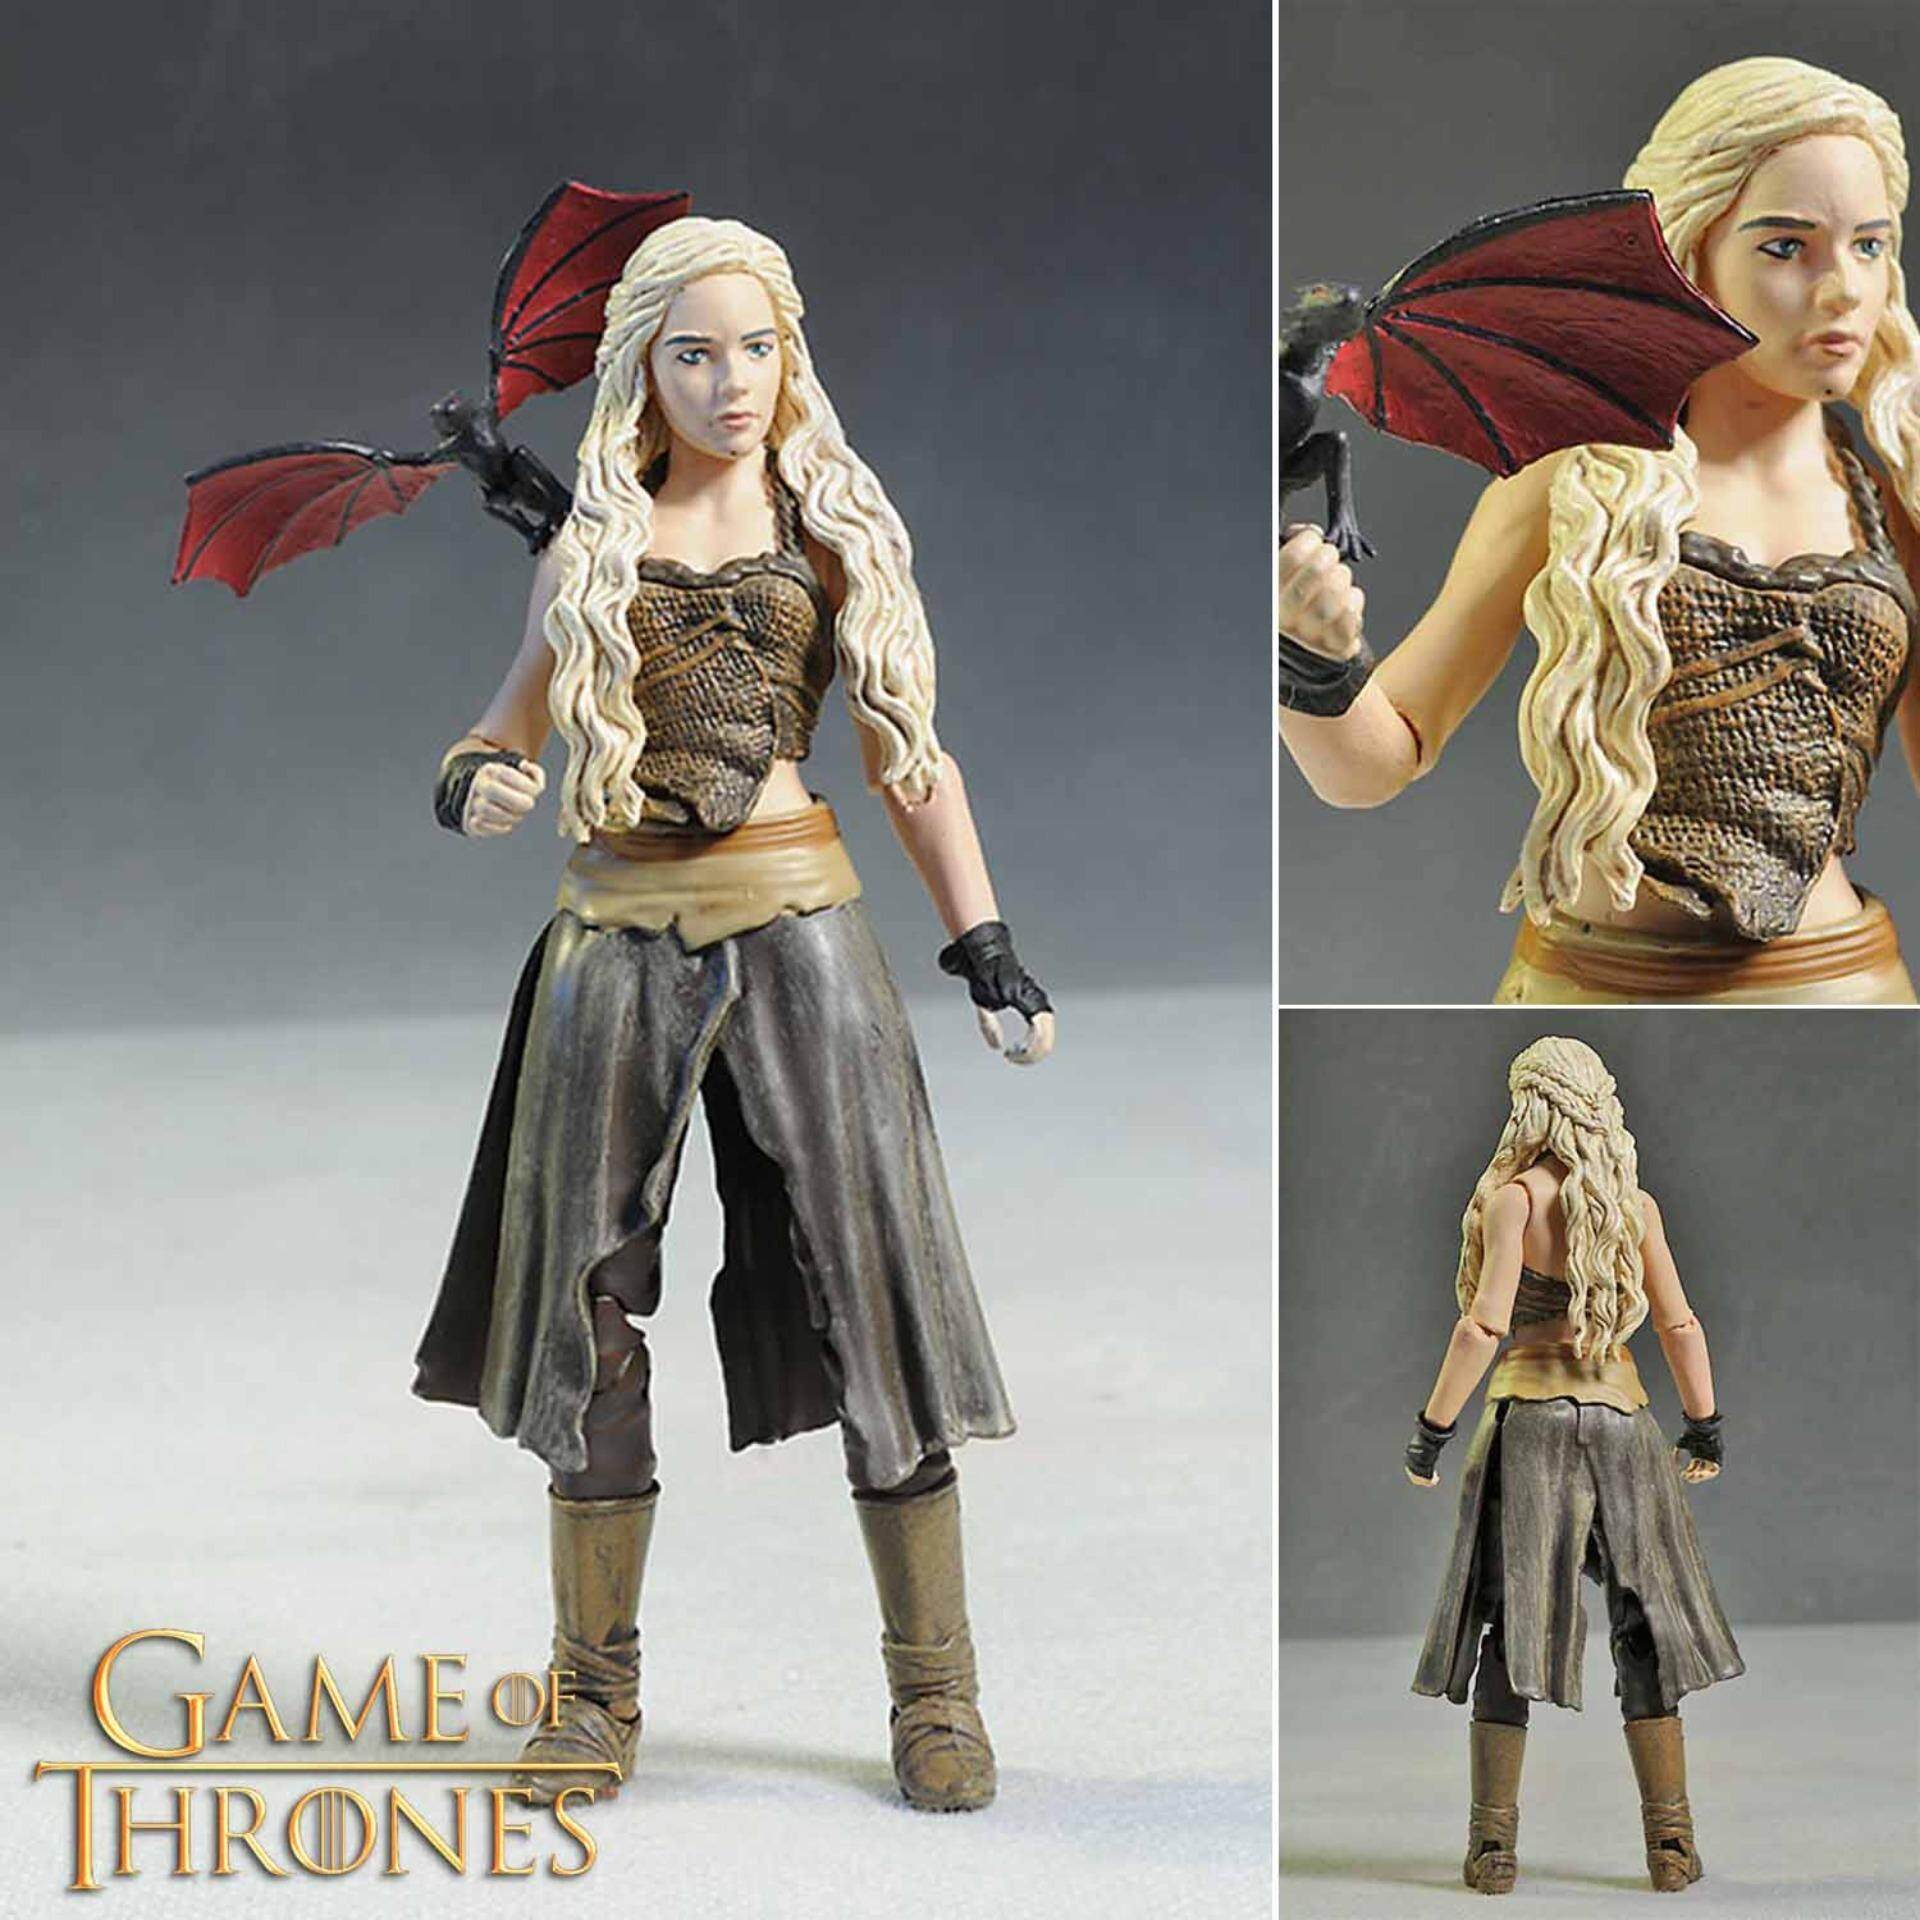 Model โมเดล งานแท้ 100% HBO Funko Legacy จาก Game of Thrones มหาศึกชิงบัลลังก์ Daenerys Targaryen แดเนริส ทาร์แกเรียน Emilia Clarke เอมิเลีย คลาร์ก Ver Figma ฟิกม่า Anime ขยับแขน-ขาได้ ของขวัญ Gift อนิเมะ การ์ตูน มังงะ Doll ตุ๊กตา manga Figure ฟิกเกอร์